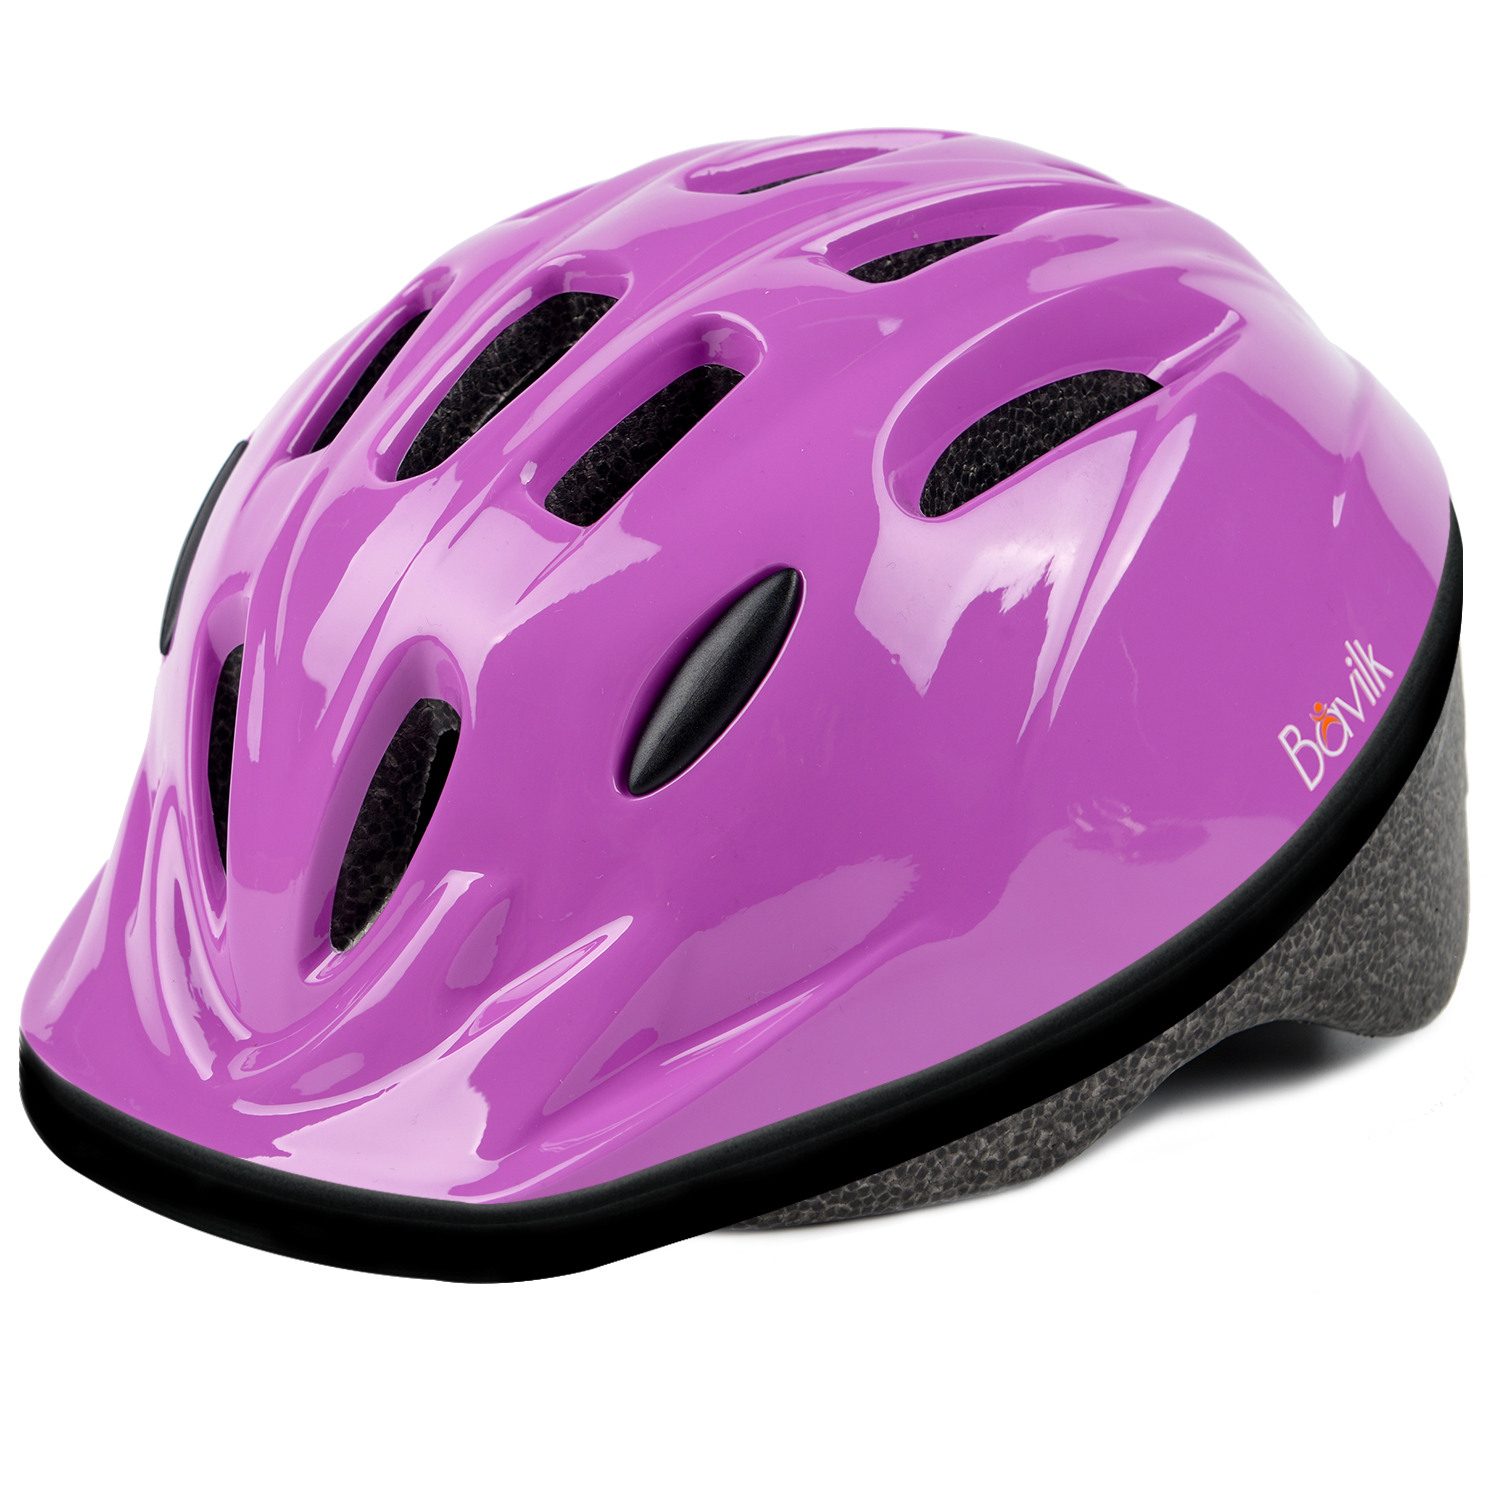 Bavilk Kids Bike Helmet,CPSC Certified Multi-Sport Helmet for Cycling Skateboard Scooter Skating,3 Sizes,from Toddler to Youth 